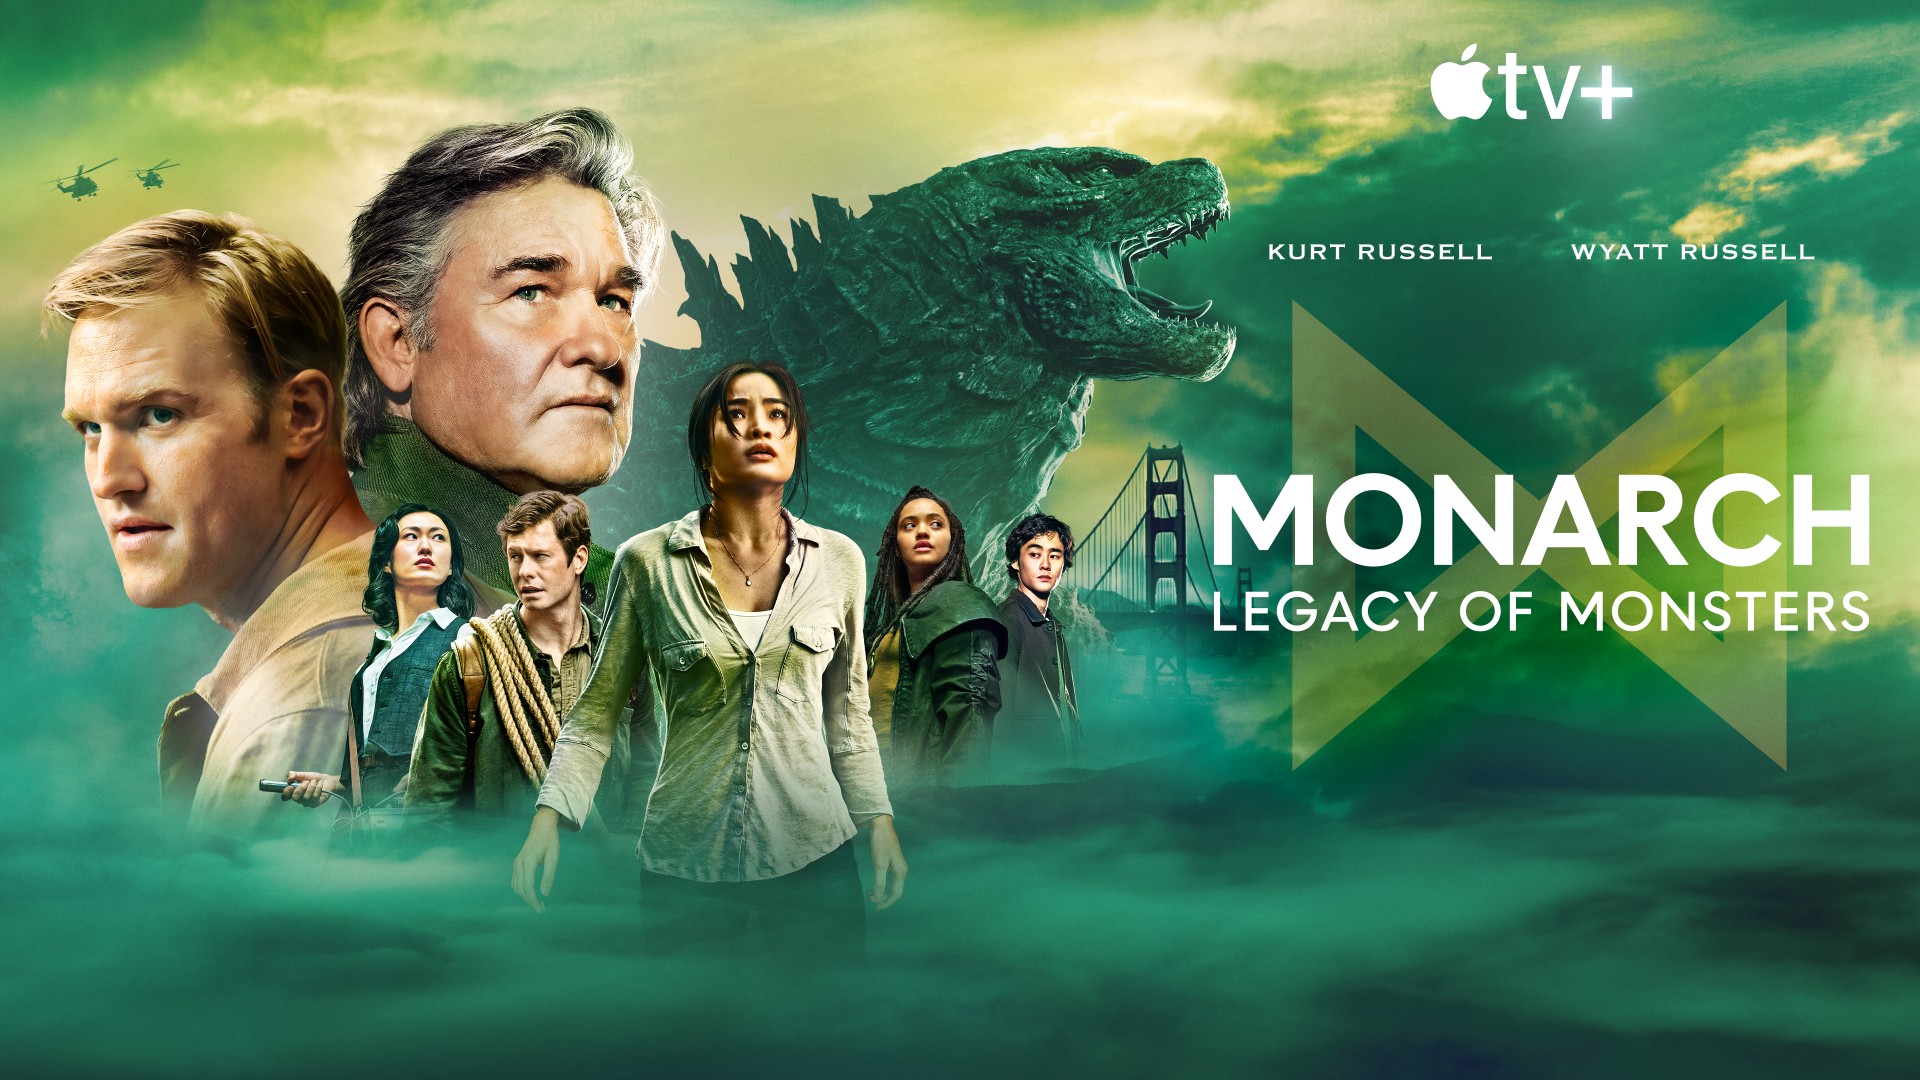 Sundays with Legendary's The MonsterVerse and Godzilla 2014!